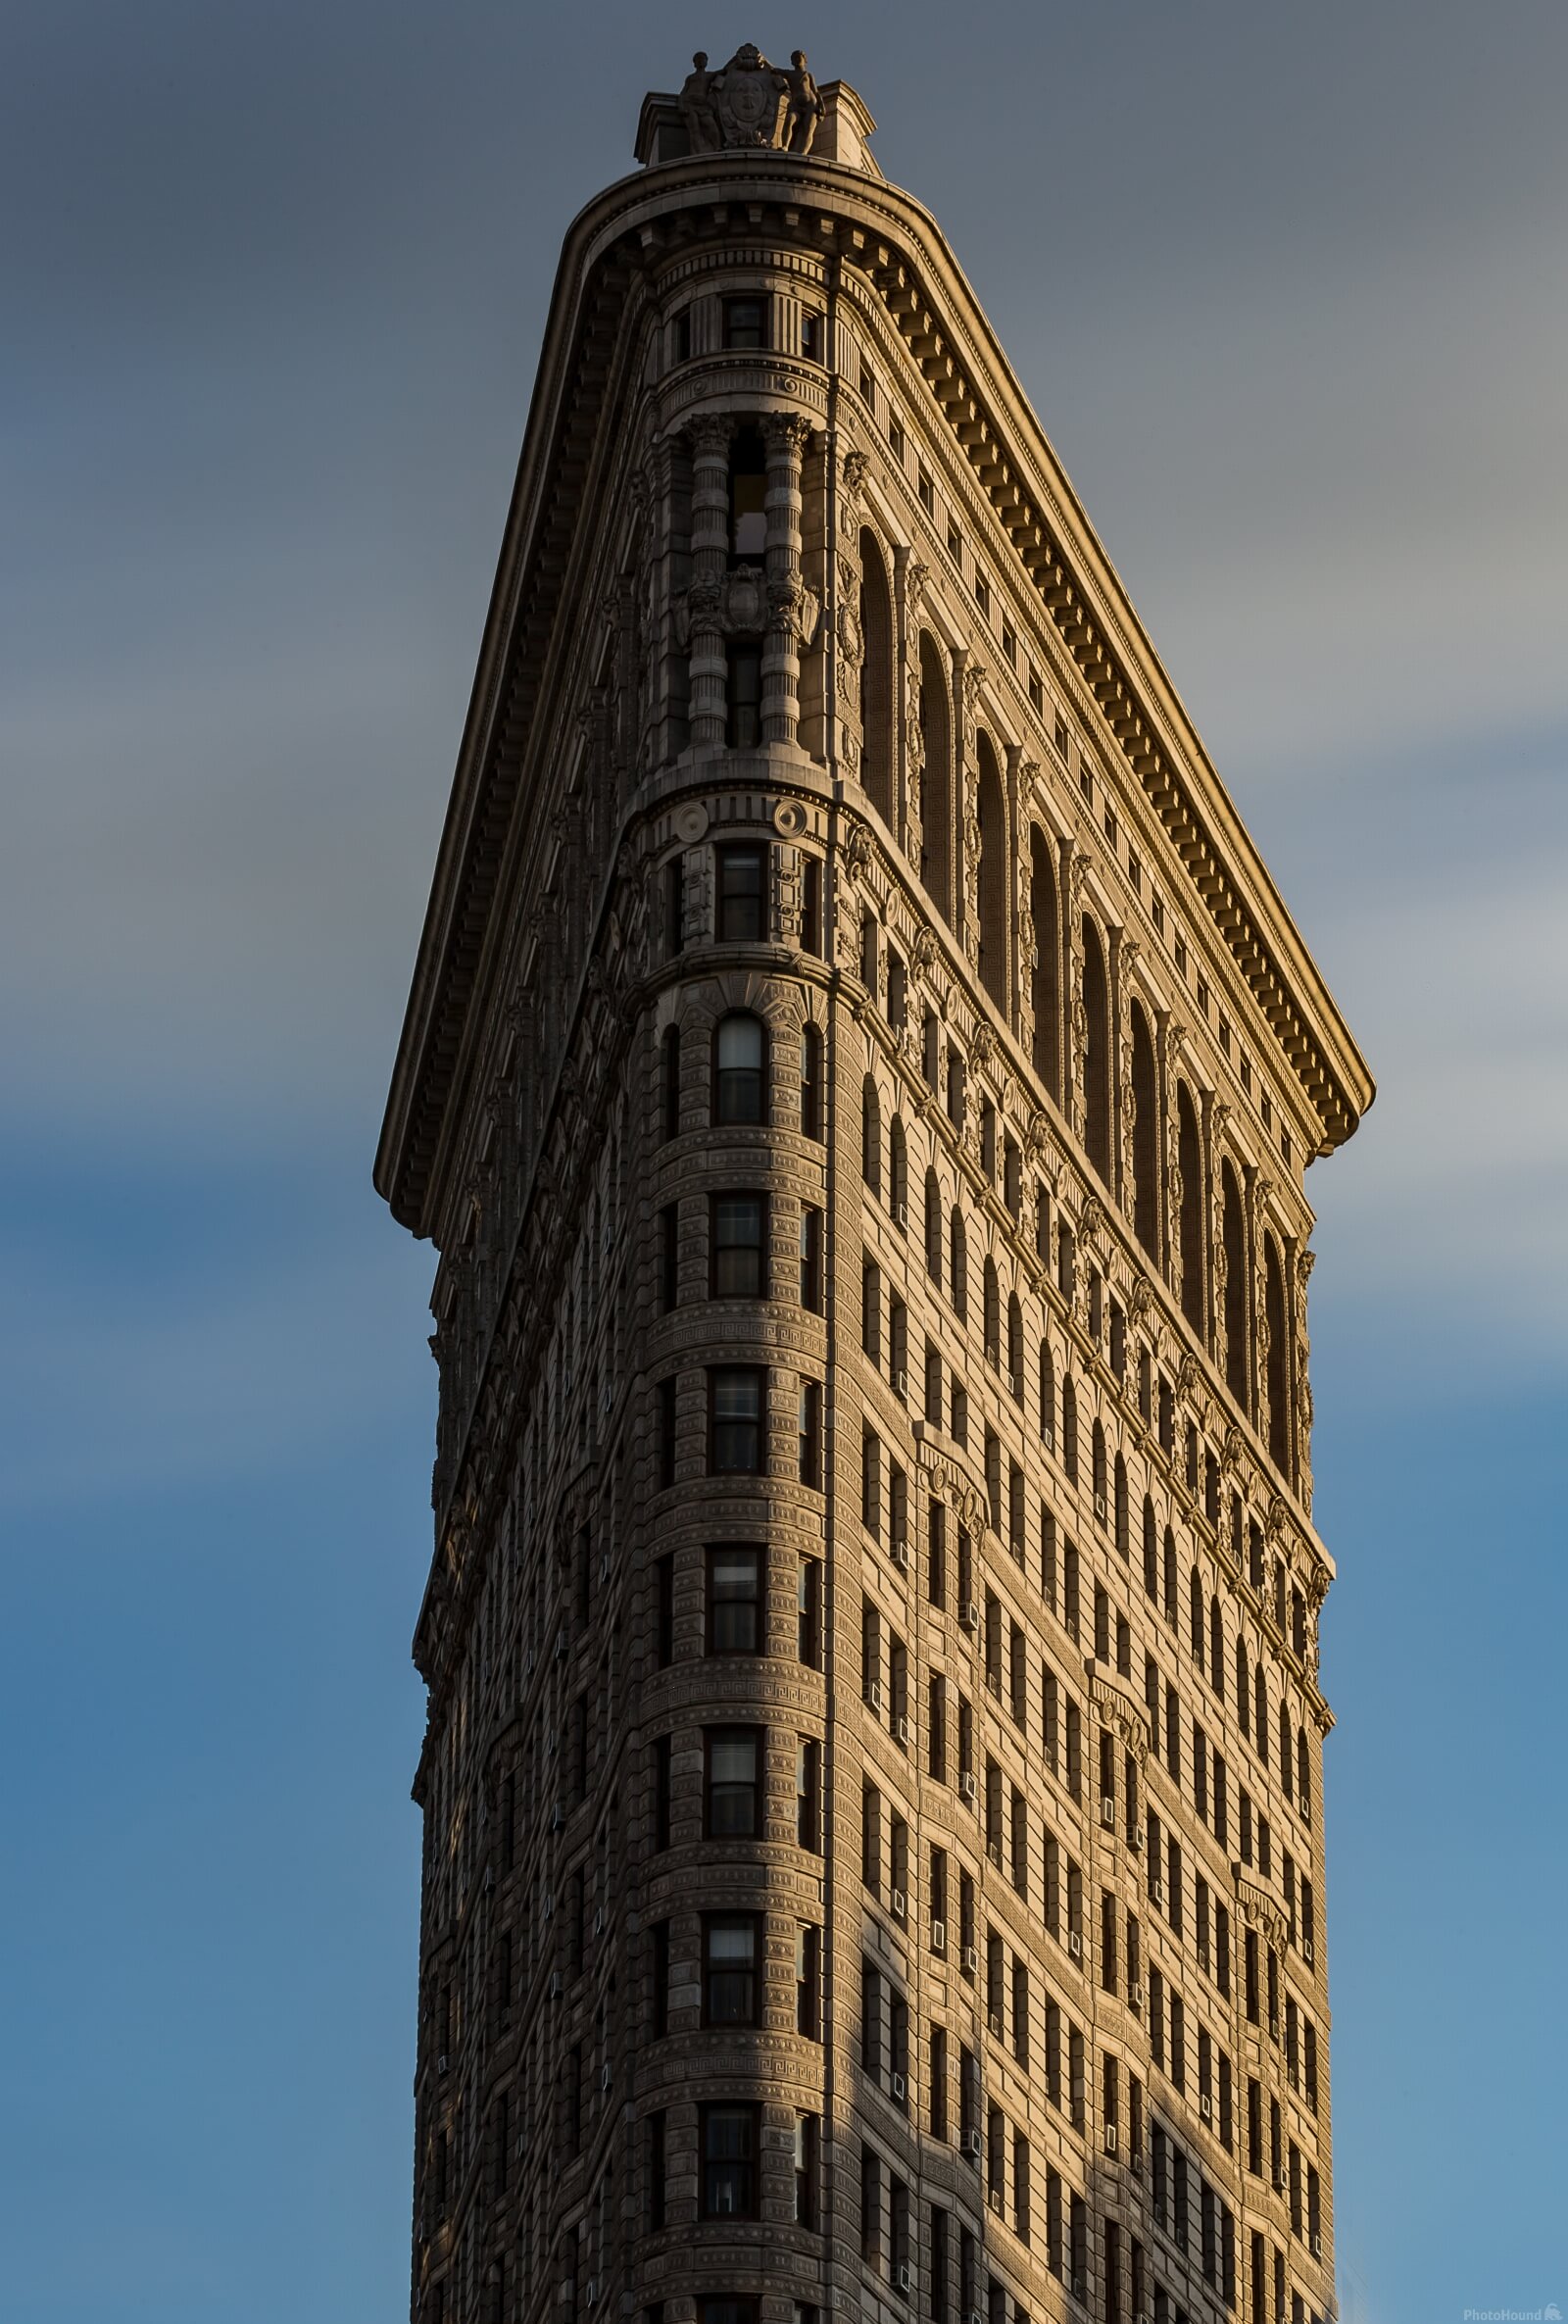 Image of Flatiron Building by Jeff Martin